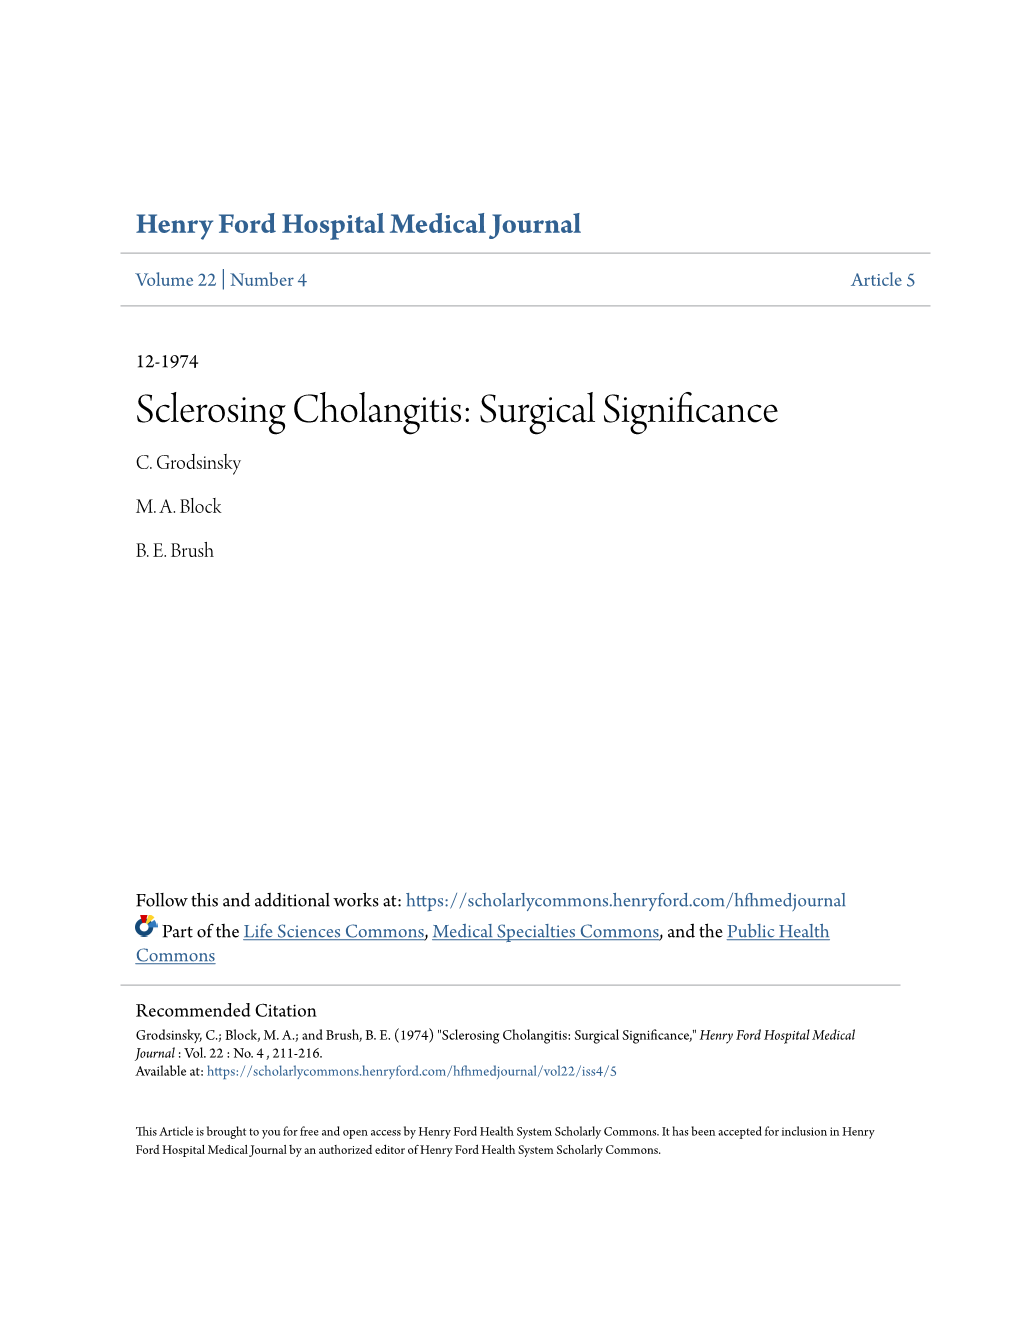 Sclerosing Cholangitis: Surgical Significance C